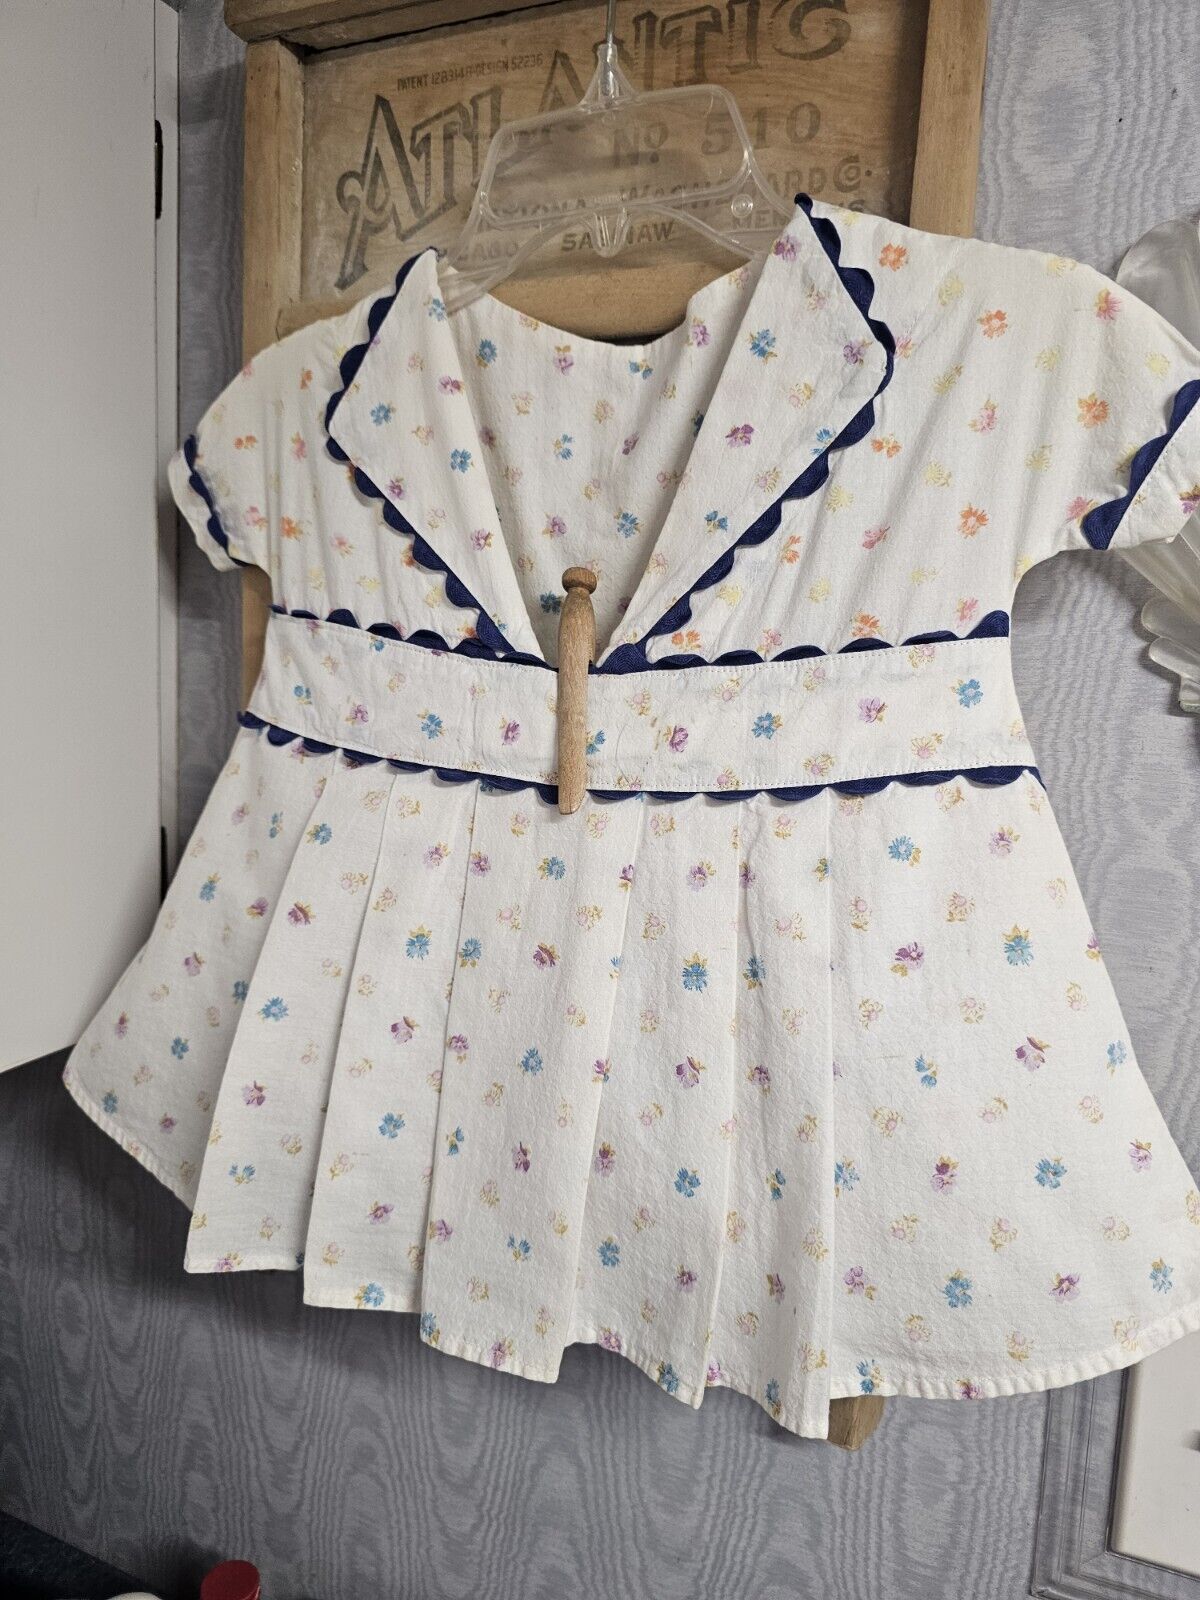 Vintage Cotton Dress Clothespin Holder Bag for Laundry Clothesline